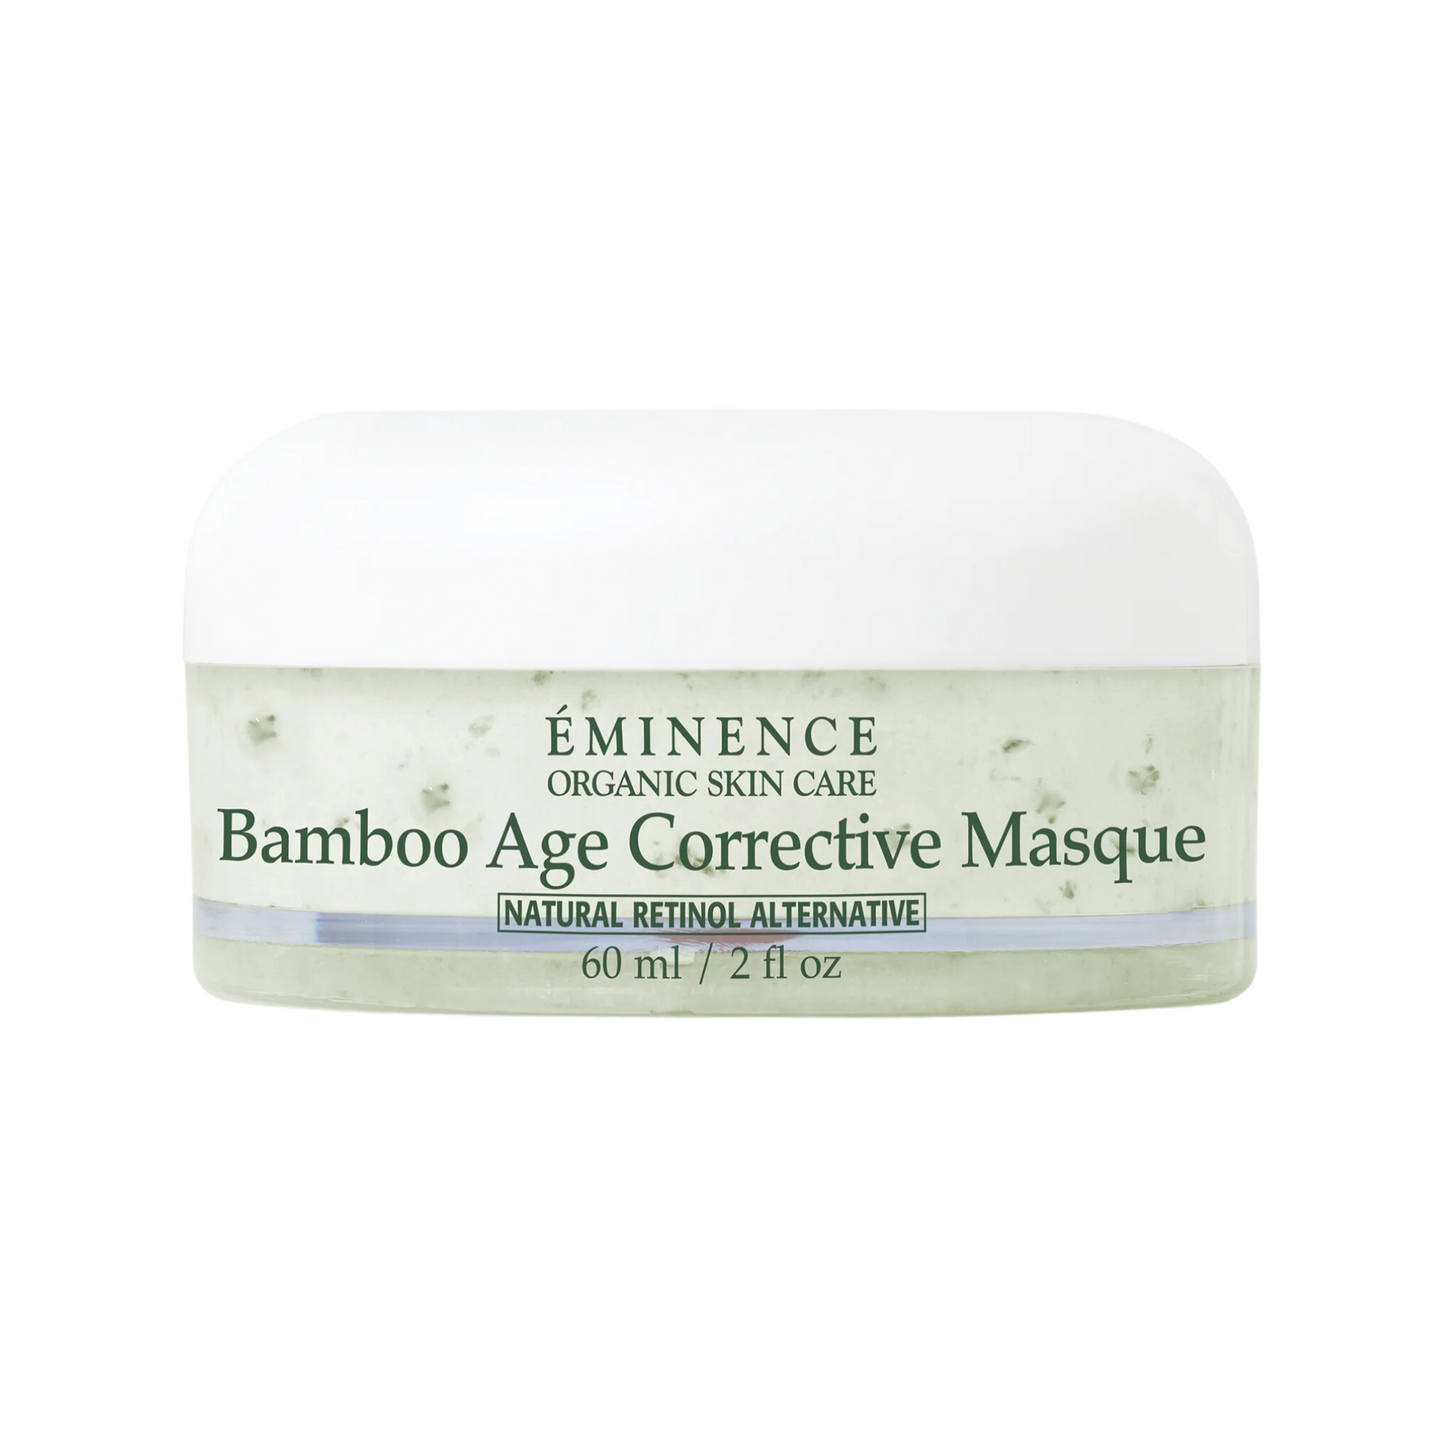 Bamboo Age Corrective Masque - Eminence Organic Skin Care